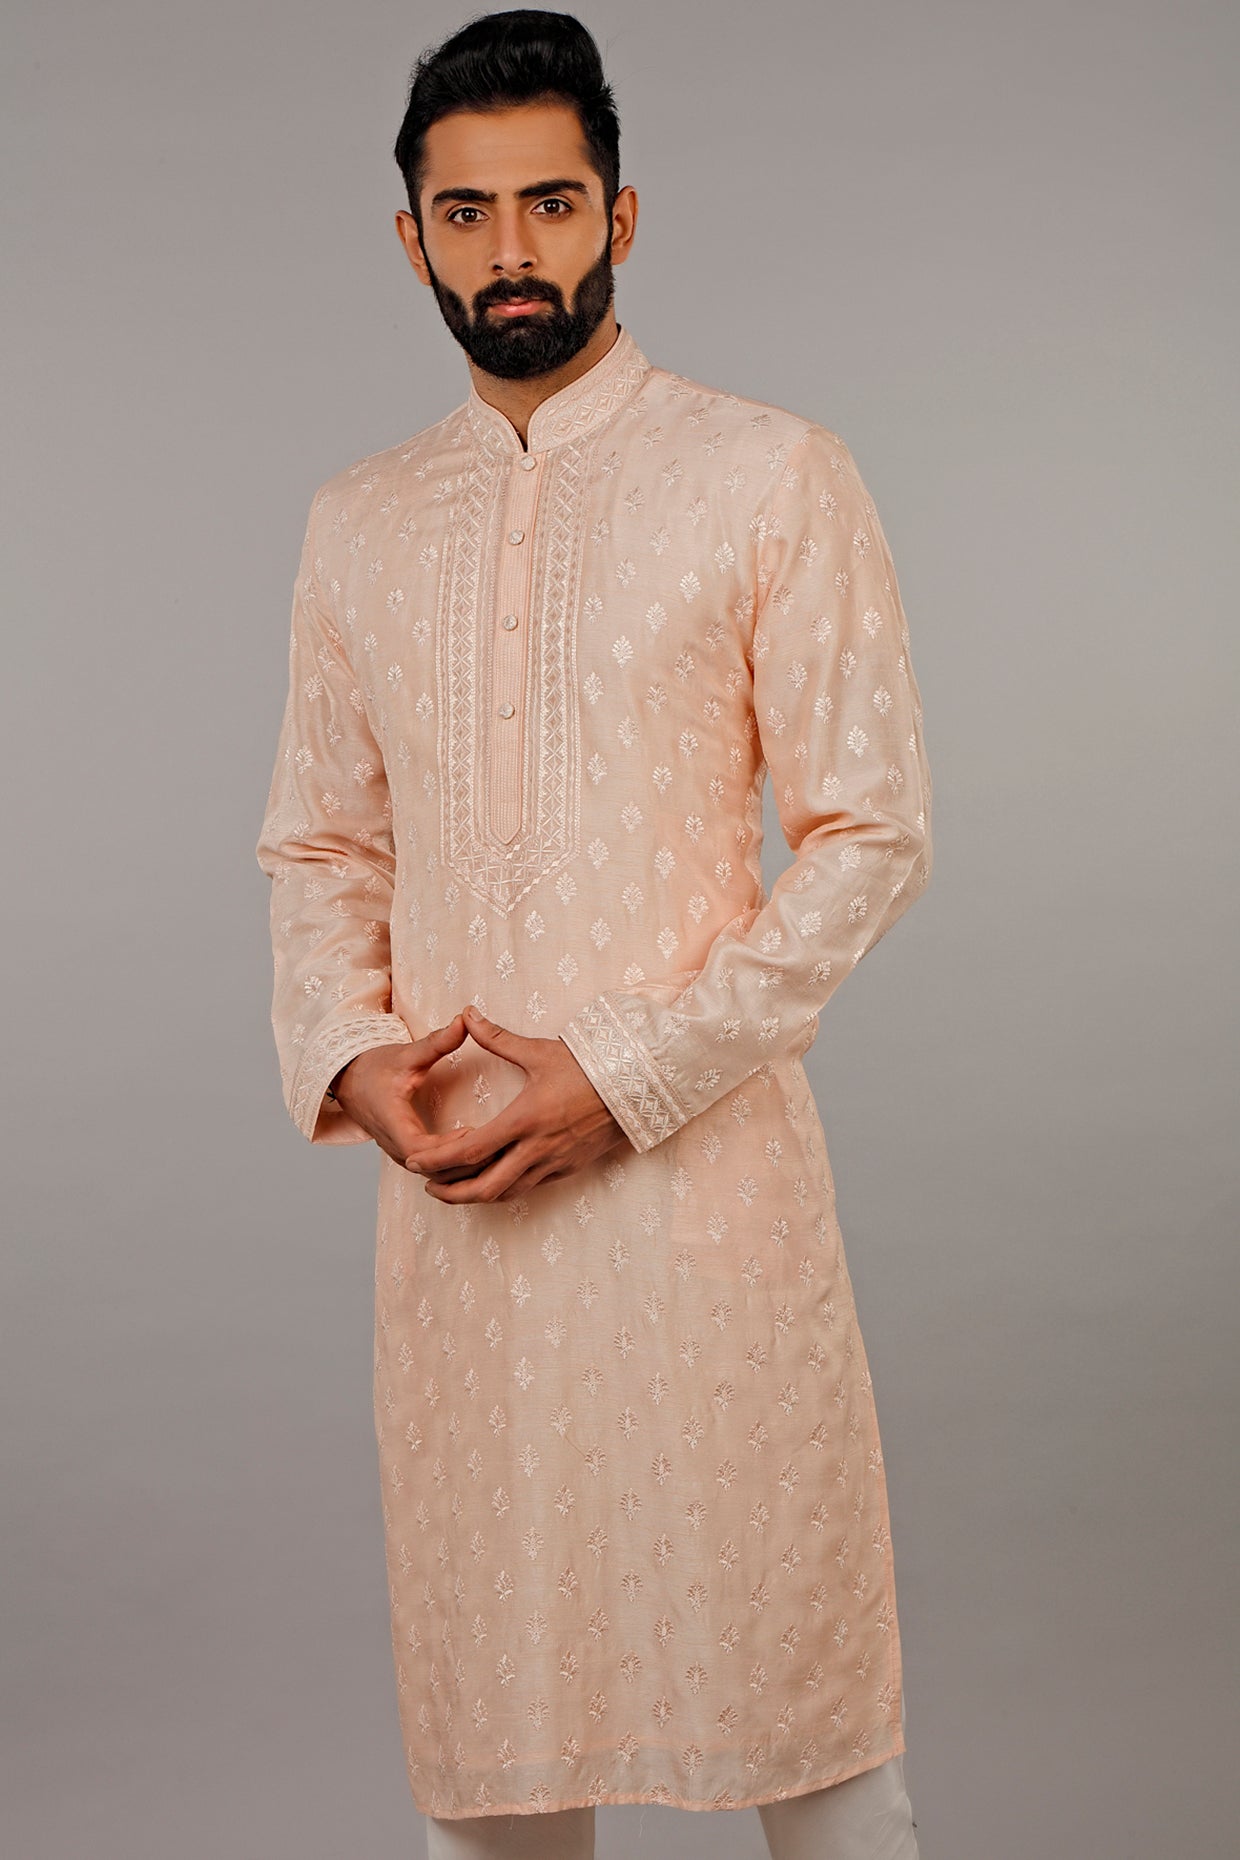 Folkwear Jewels of India Kurta Shirt, Kamiz Tunic, Churidar Pants & Gandhi  Hat Sewing Pattern # 135 for Men and Women